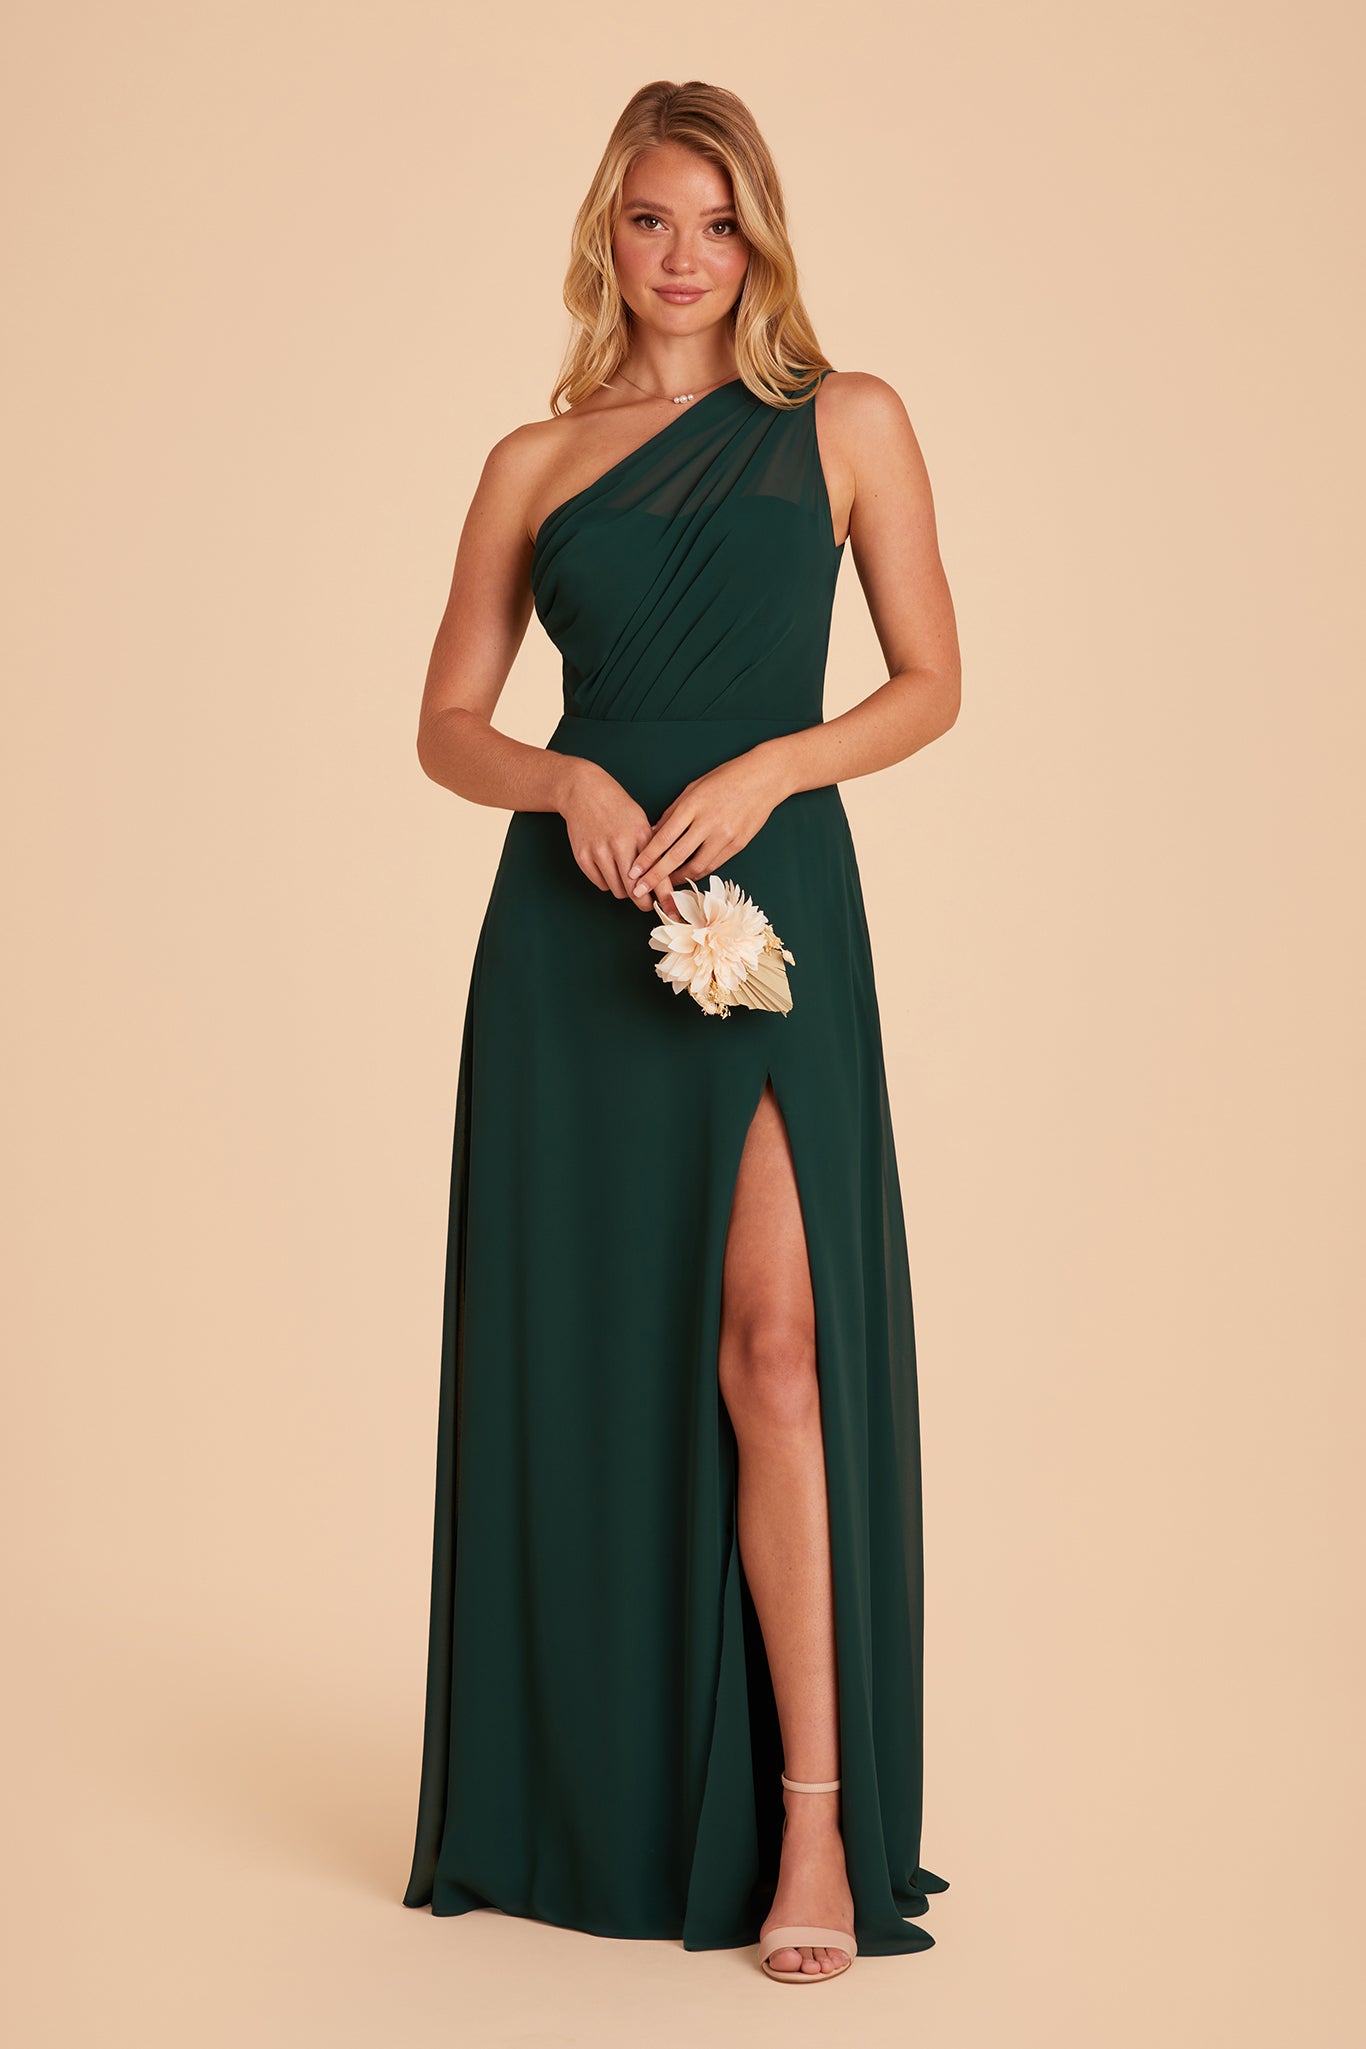 Kira One Shoulder Bridesmaid Dress in Emerald